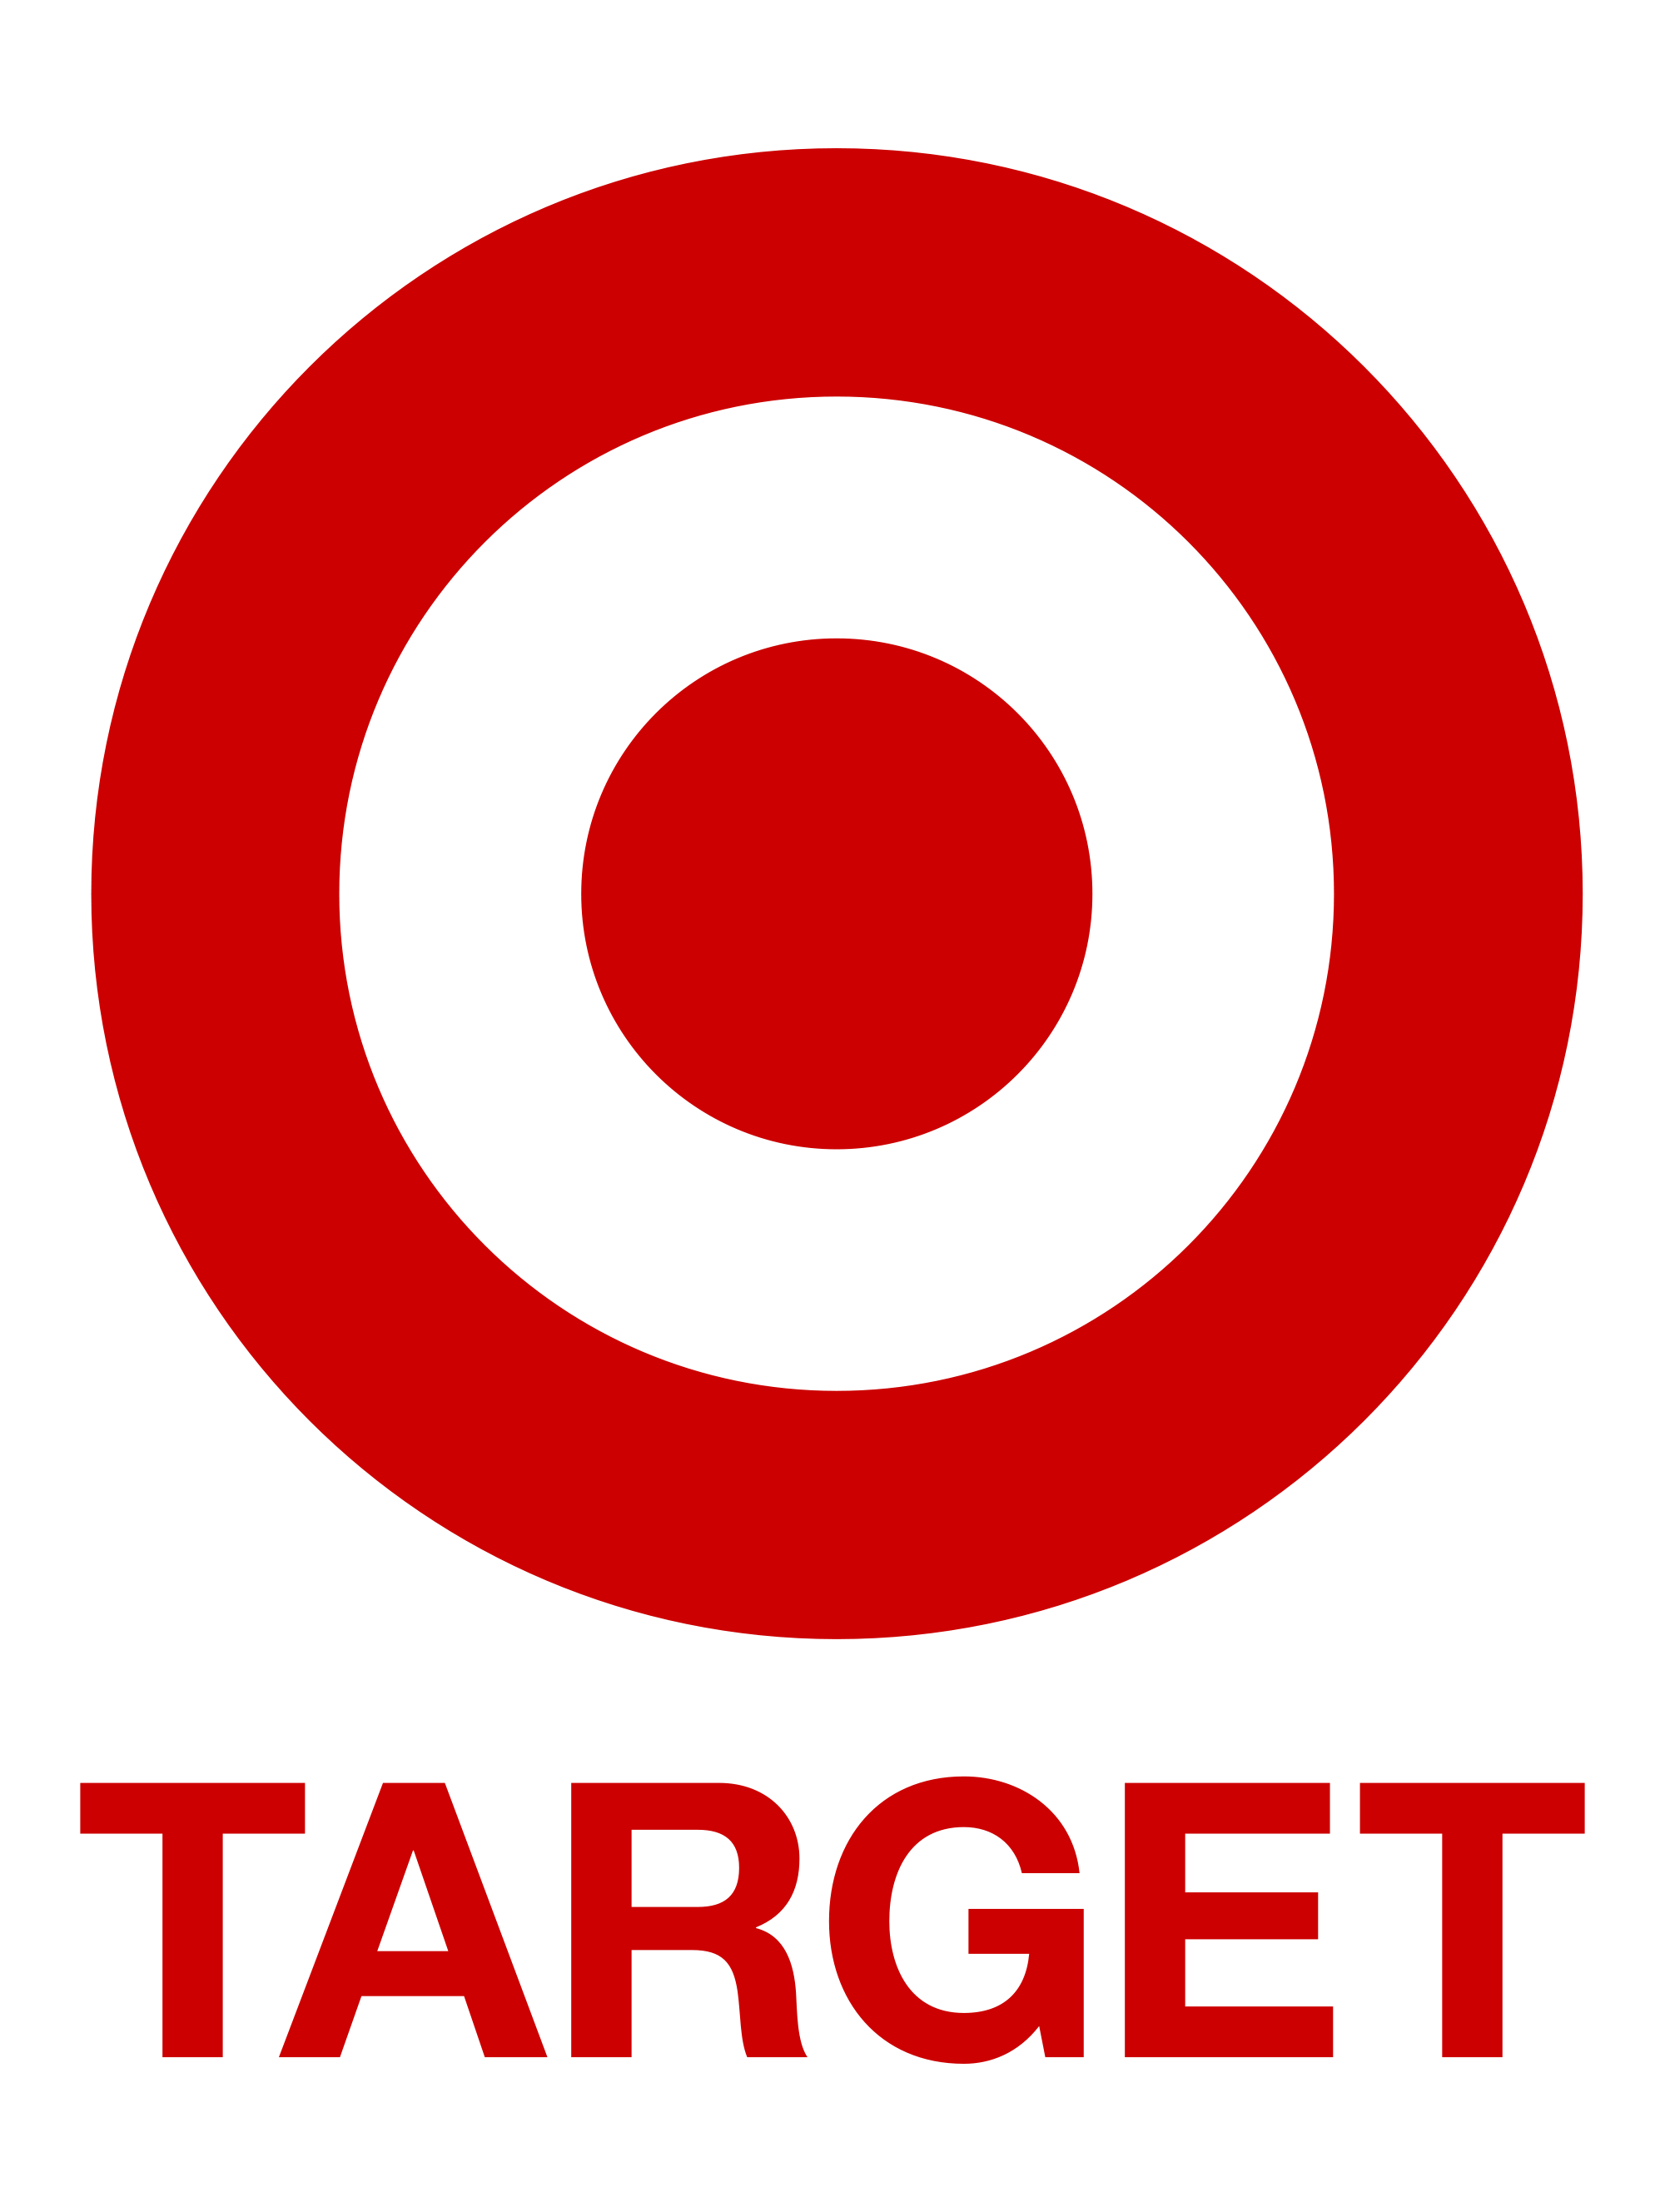 Target Png - Target, Transparent background PNG HD thumbnail